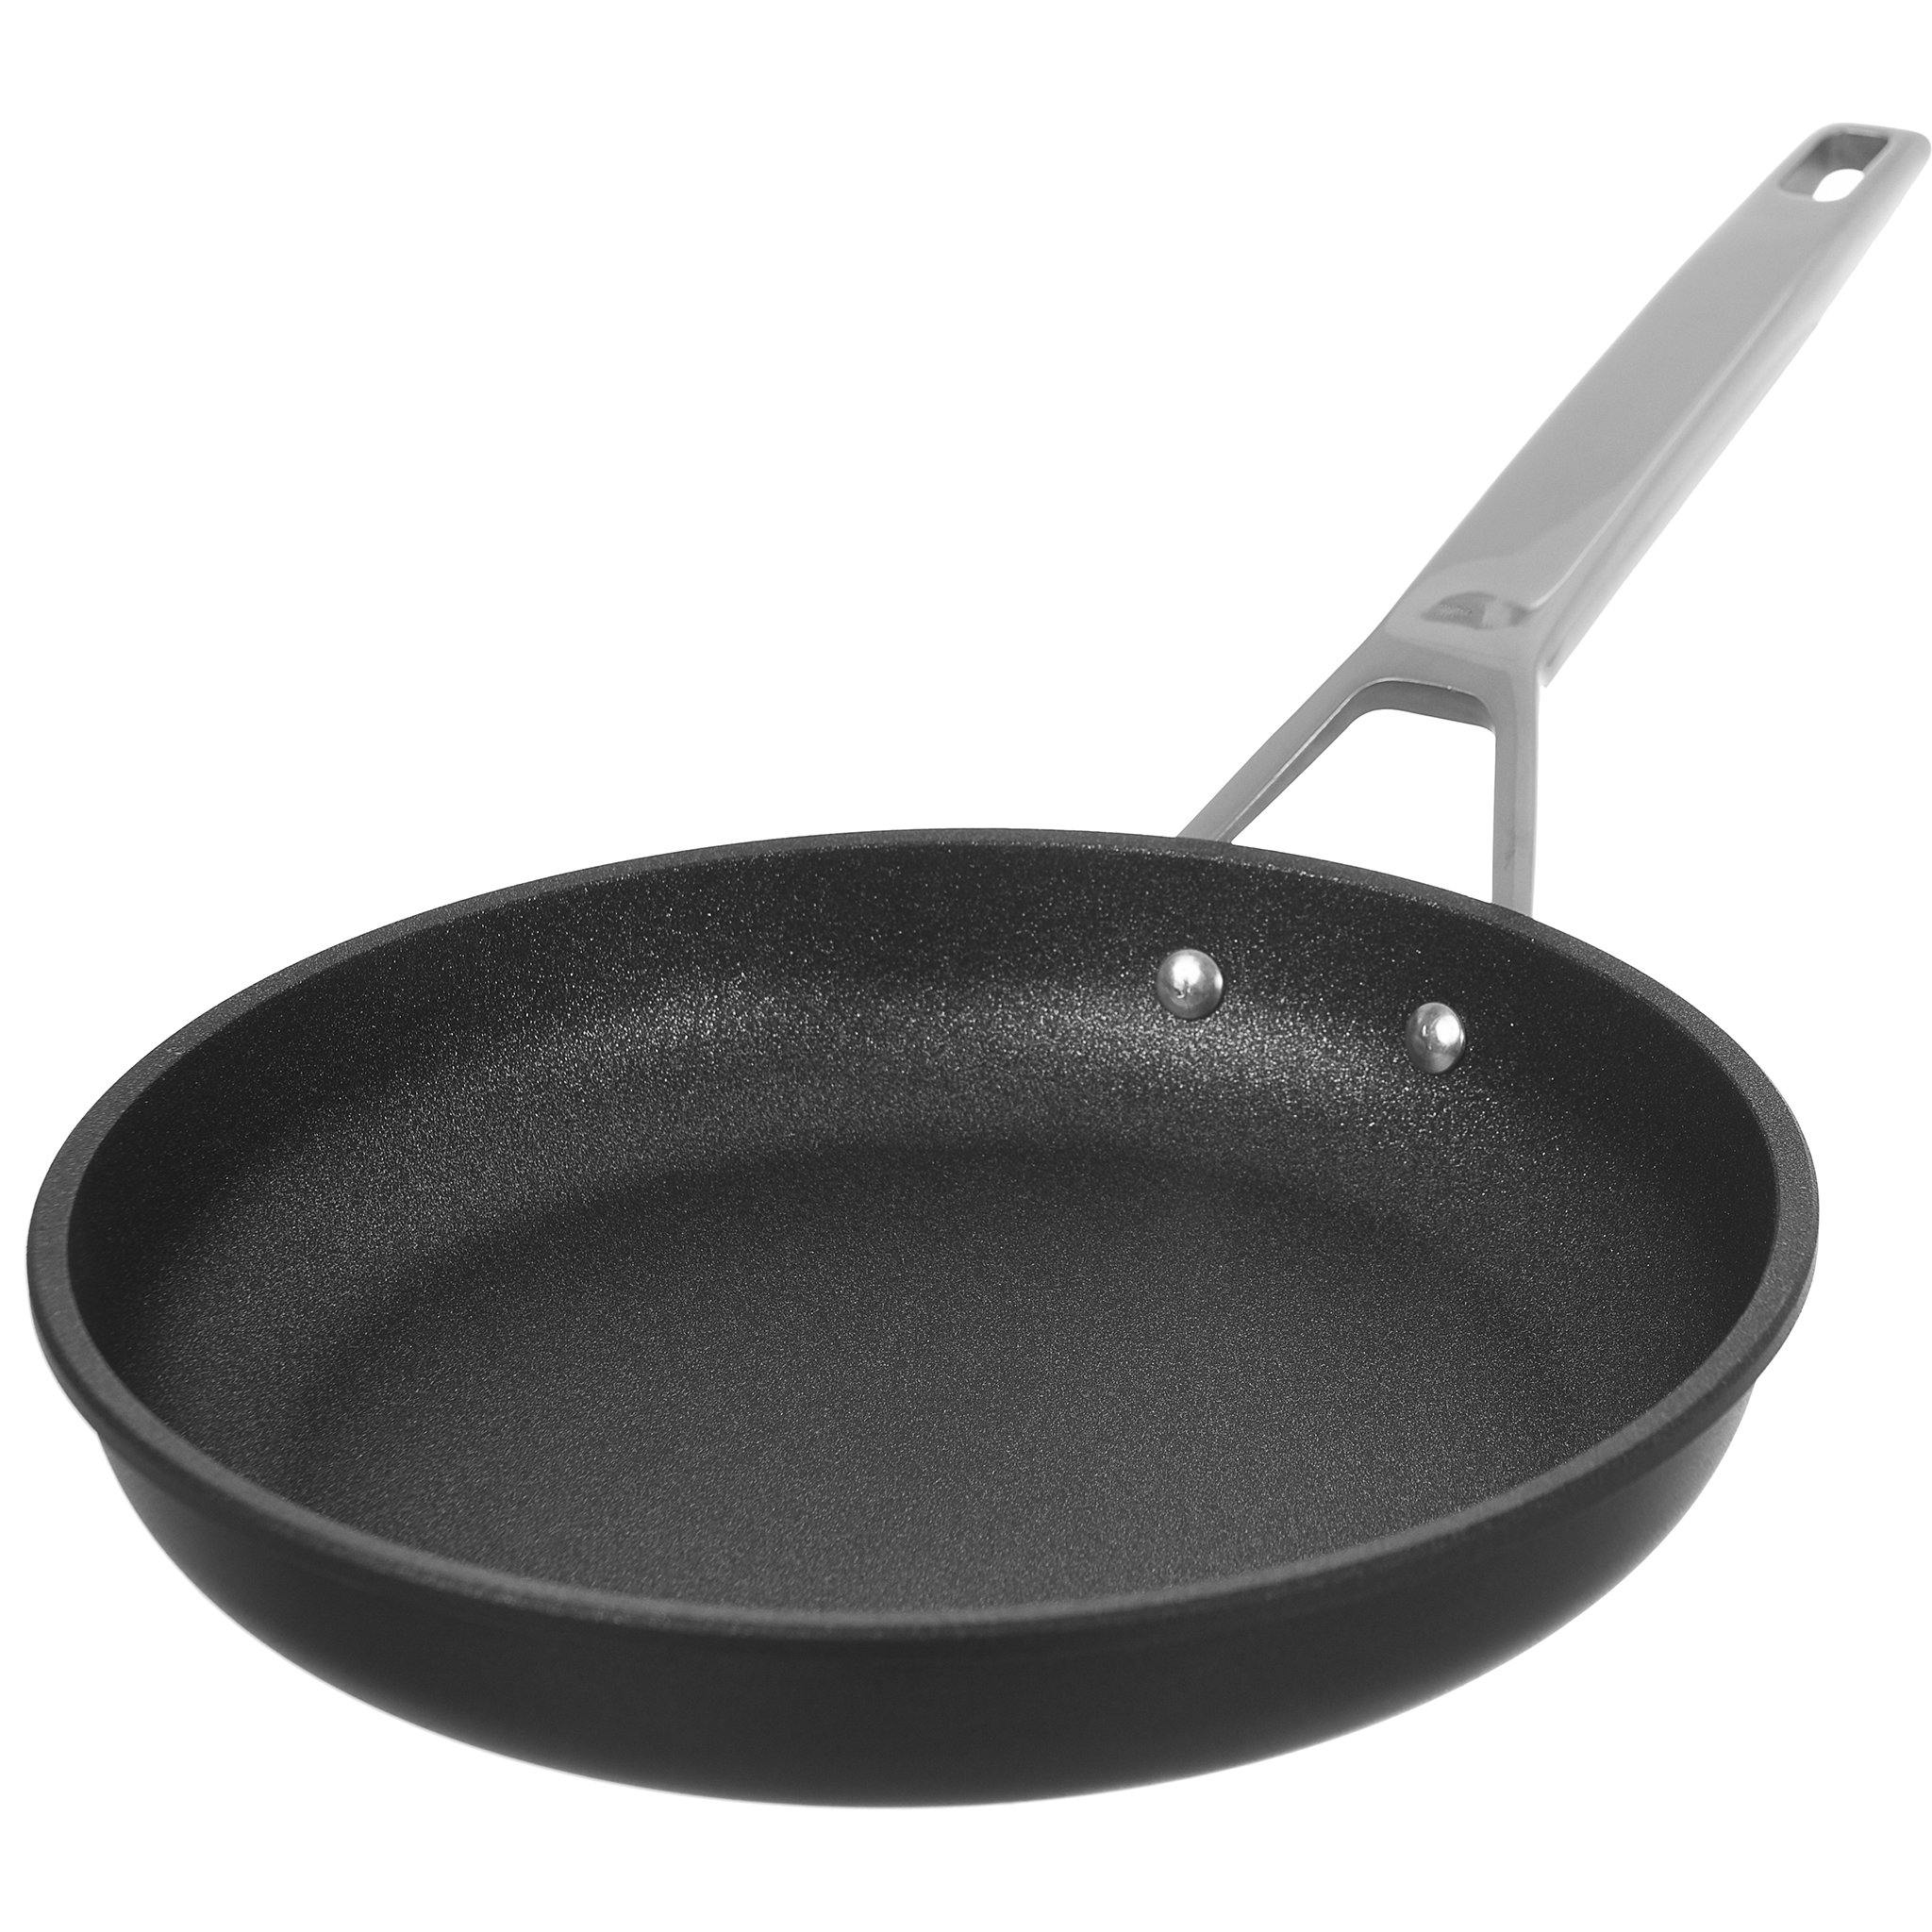 Risoli - Frypan with Grey Handle - Black - Die Cast Aluminum - 24cm - 44000404